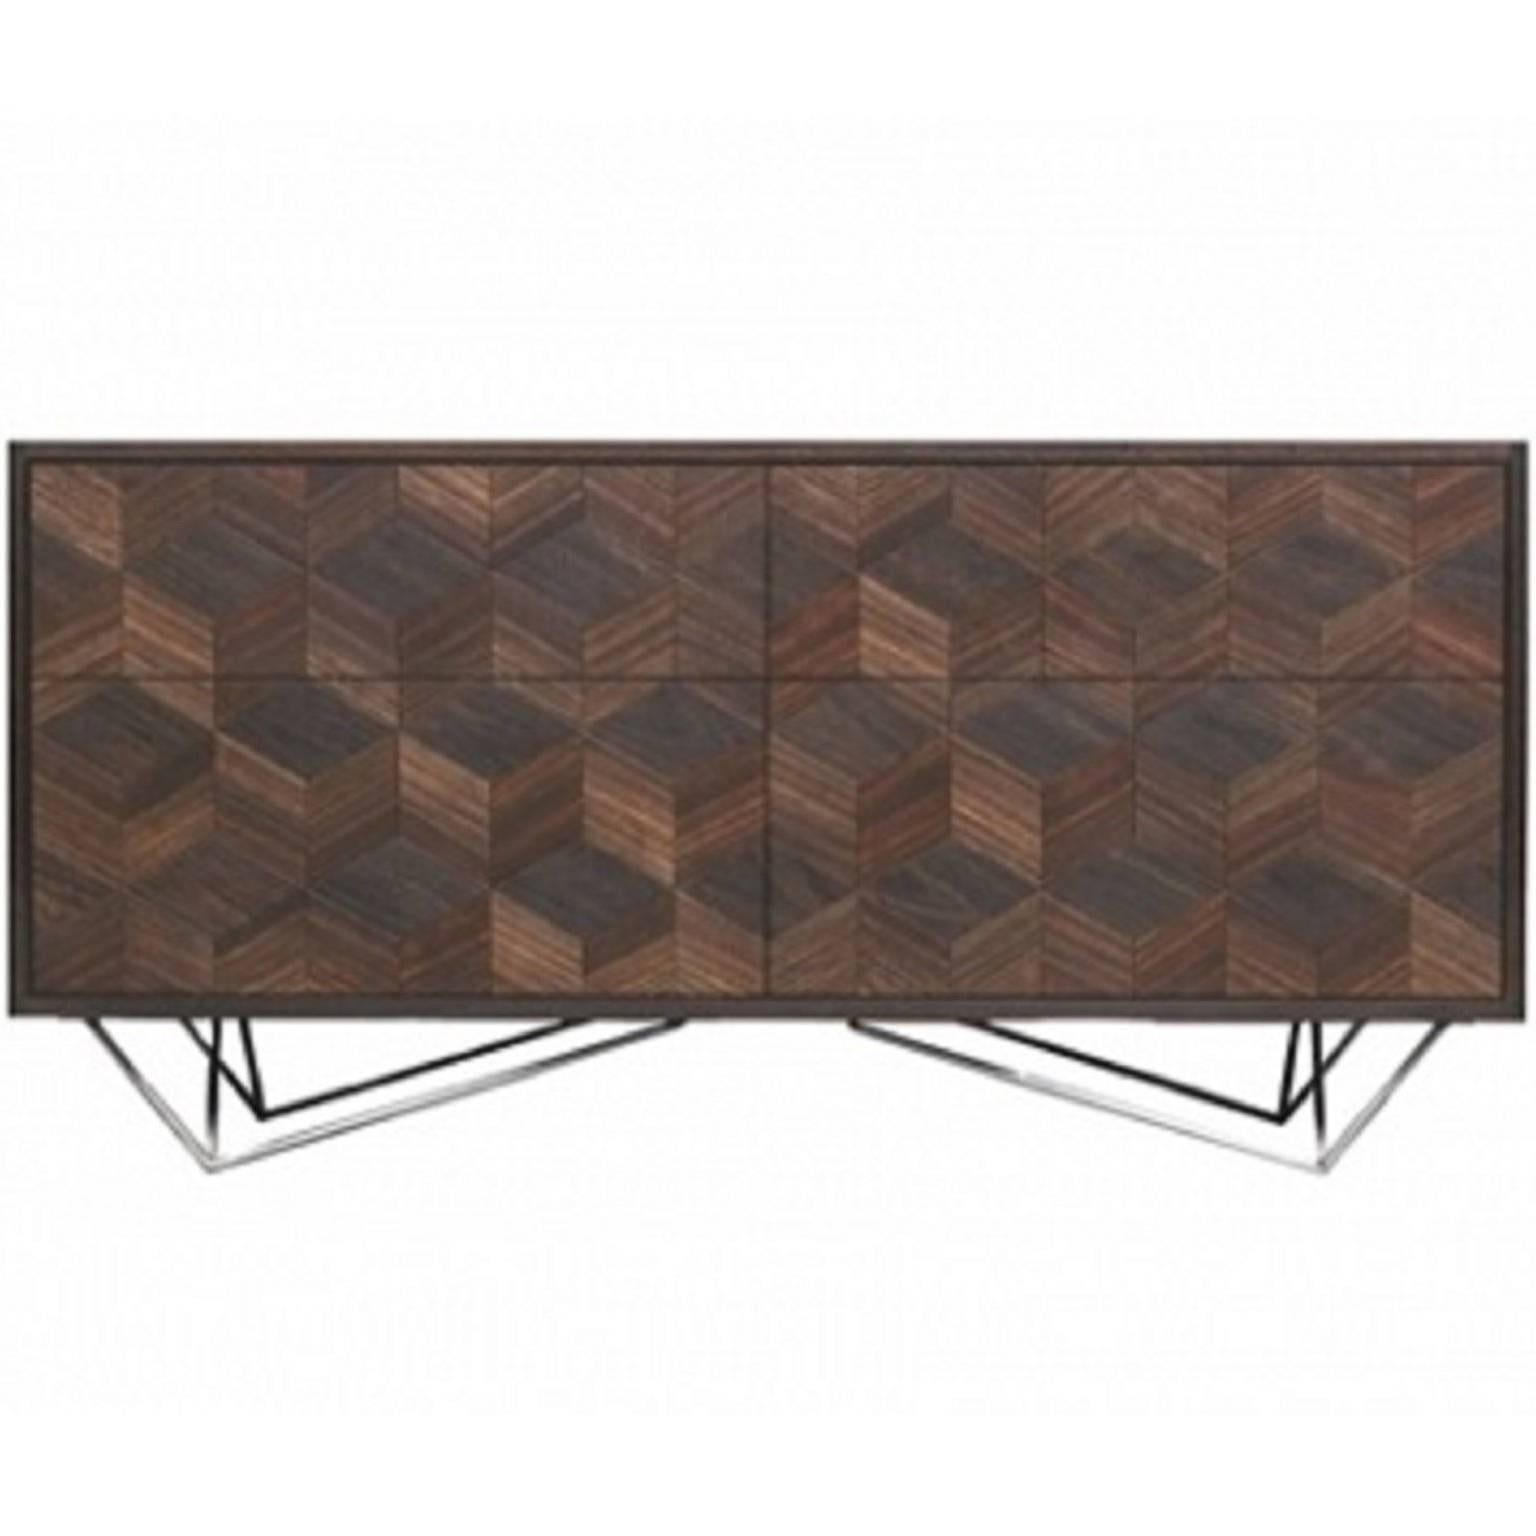 Smoked Oak Sideboard by Meiwood Furniture